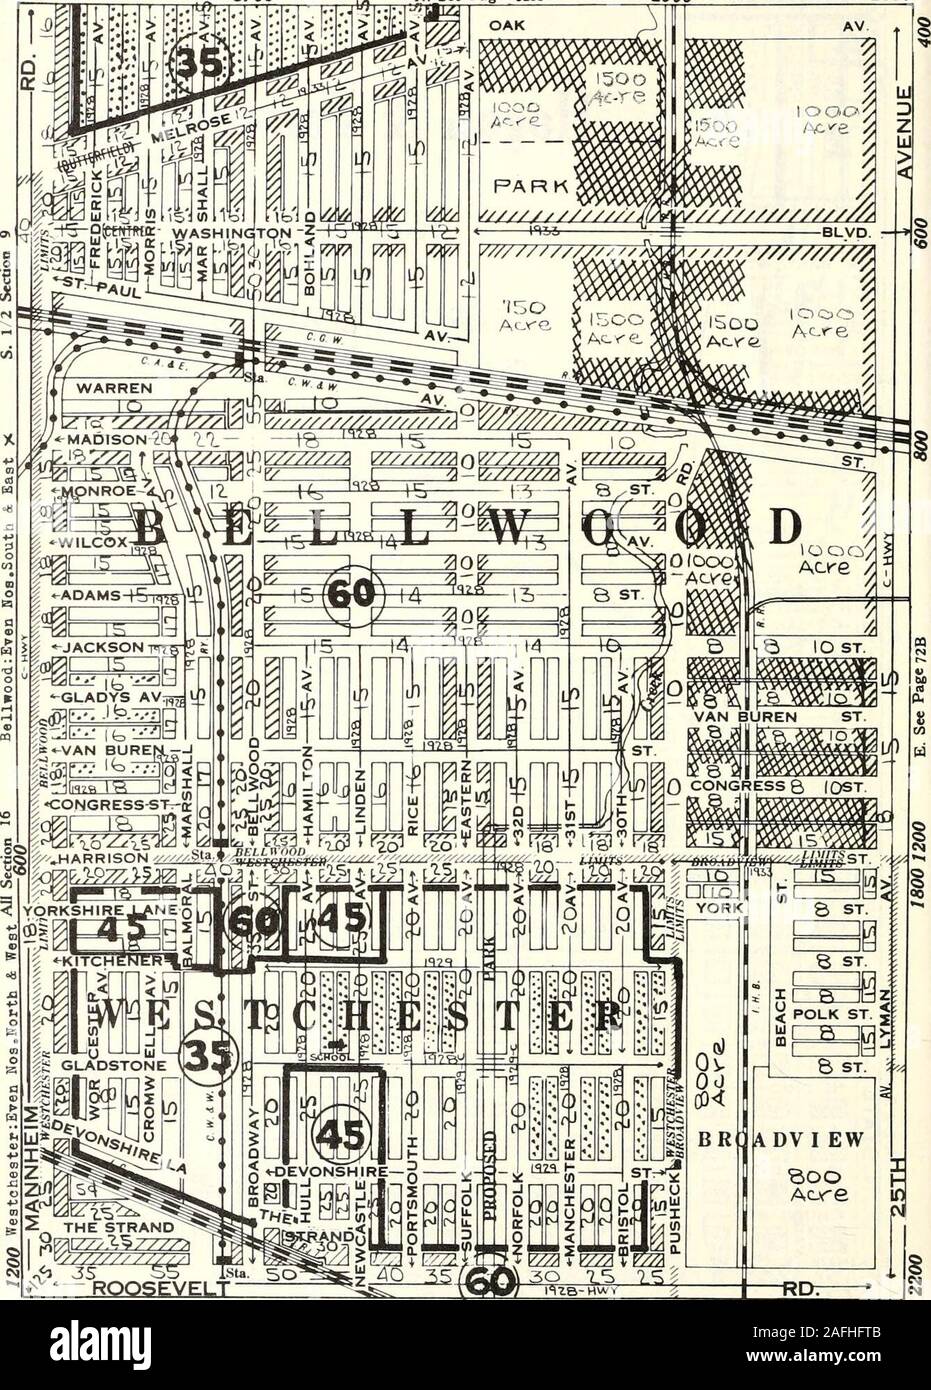 . Olcott's land values blue book of Chicago. E.l All s ; Z Class 6-12-56-Areer E.400 S. See Page 82 10 Class 5-C-li-56-4o-ADer E.800 72 A OLCOTTS LAND VALUES & ZONING 1936 4100 3700 T. 39 N.—R. 12 E. N. See Page 62A 2900 2S00. LiJIZ , &lt;rJ| 2 THE STRAND ROOSEVELT 10400 3V/i Sec S. See Page 82AClass £-b-4- Vac Lota-Amer 10000 &lt;fi Sec 16 Class £-5-4-15-i:o3t Vac-Acierri Sec 16 Class 4-15-i;ew Sub-Amer 9800 2500 SEi Sec 9-roat Vac-Amer NEi Sec 16 Class 2-3-4-15-H03t Vac-Aner aE-|- Sec 16 Class 4-15-lTew Sub Vac-Amer OLCOTTS LAND VALUES & ZONING 1936 Stock Photo